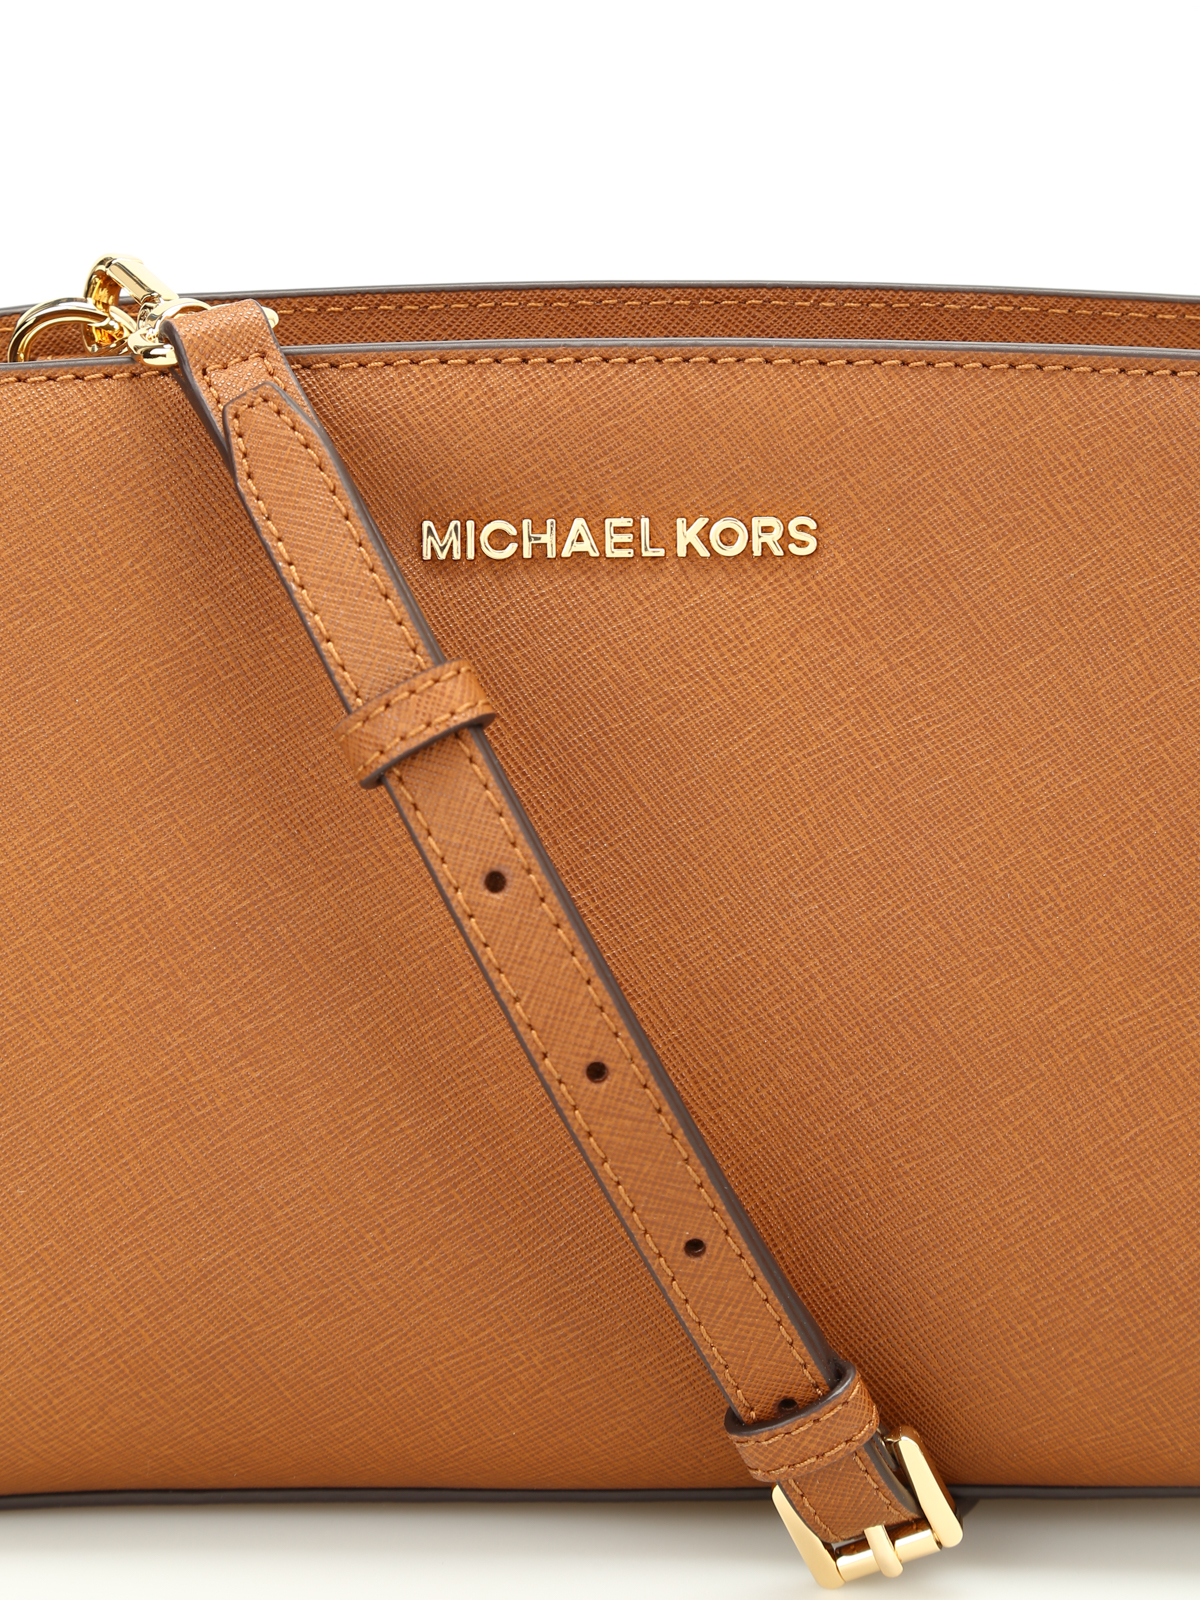 Michael Kors Selma Saffiano Leather Medium Messenger Bag